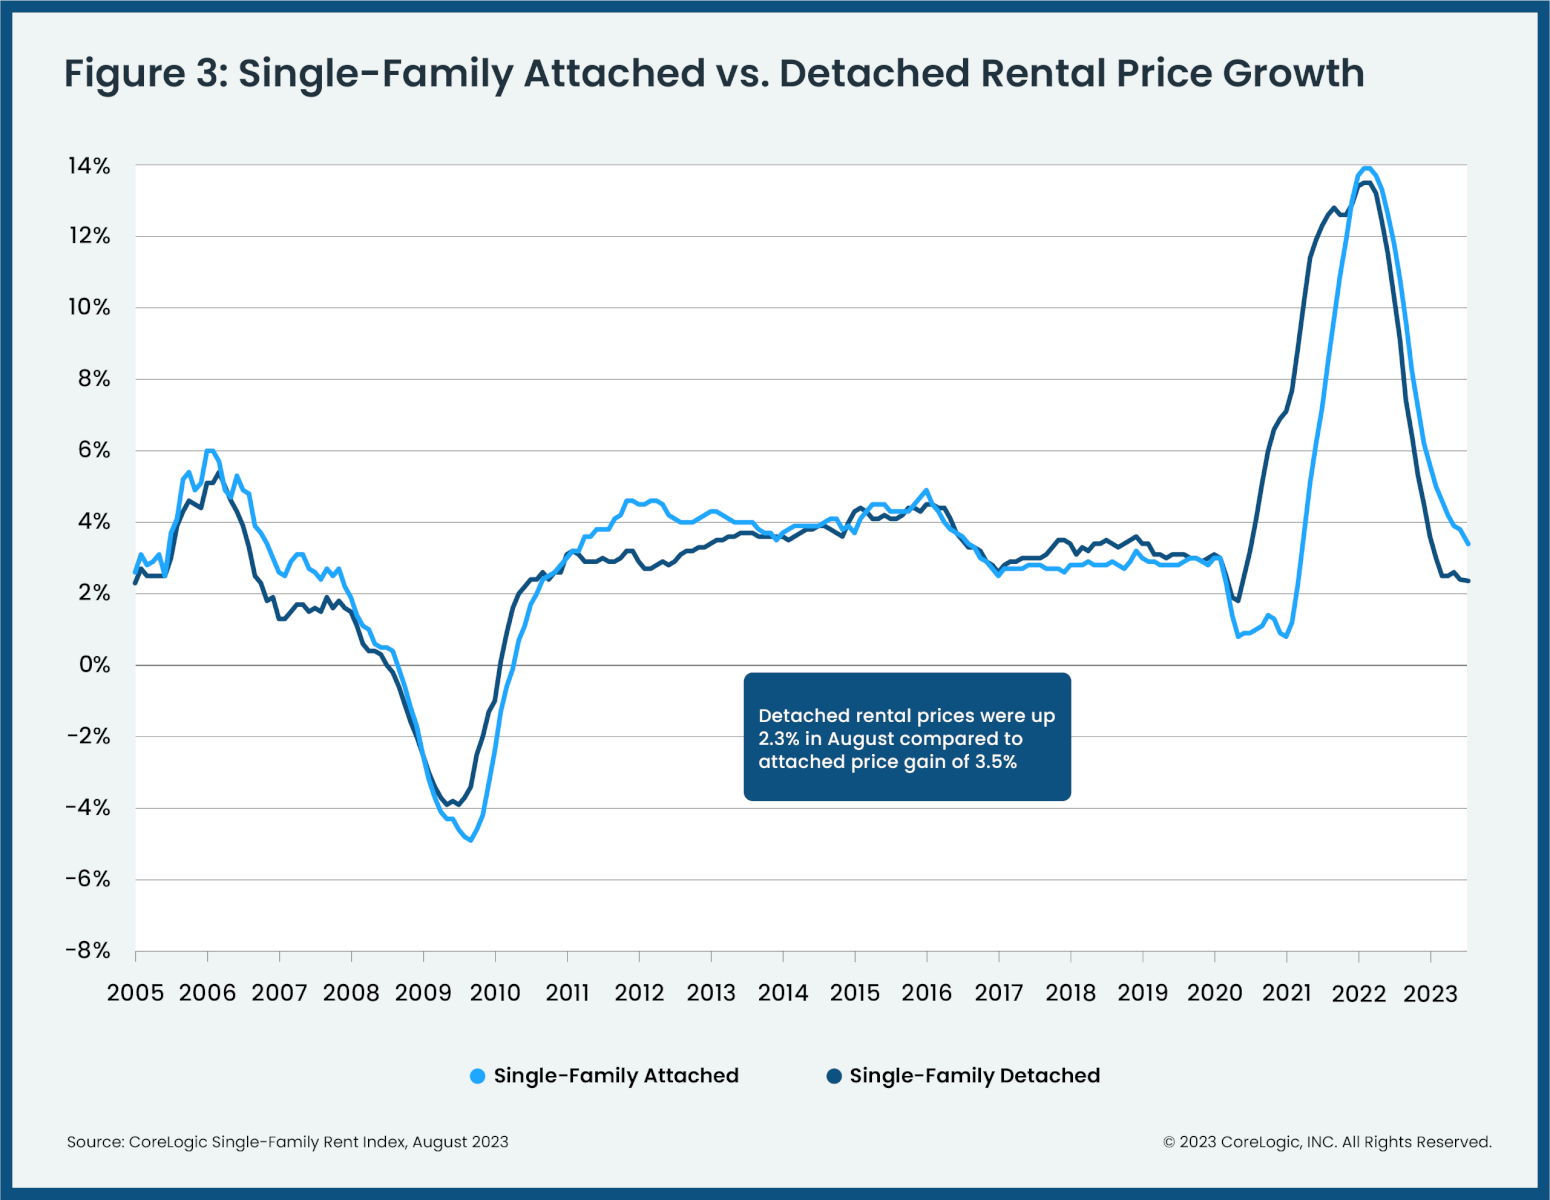 U.S. attached versus detached rental price growth, 2005 - 2023